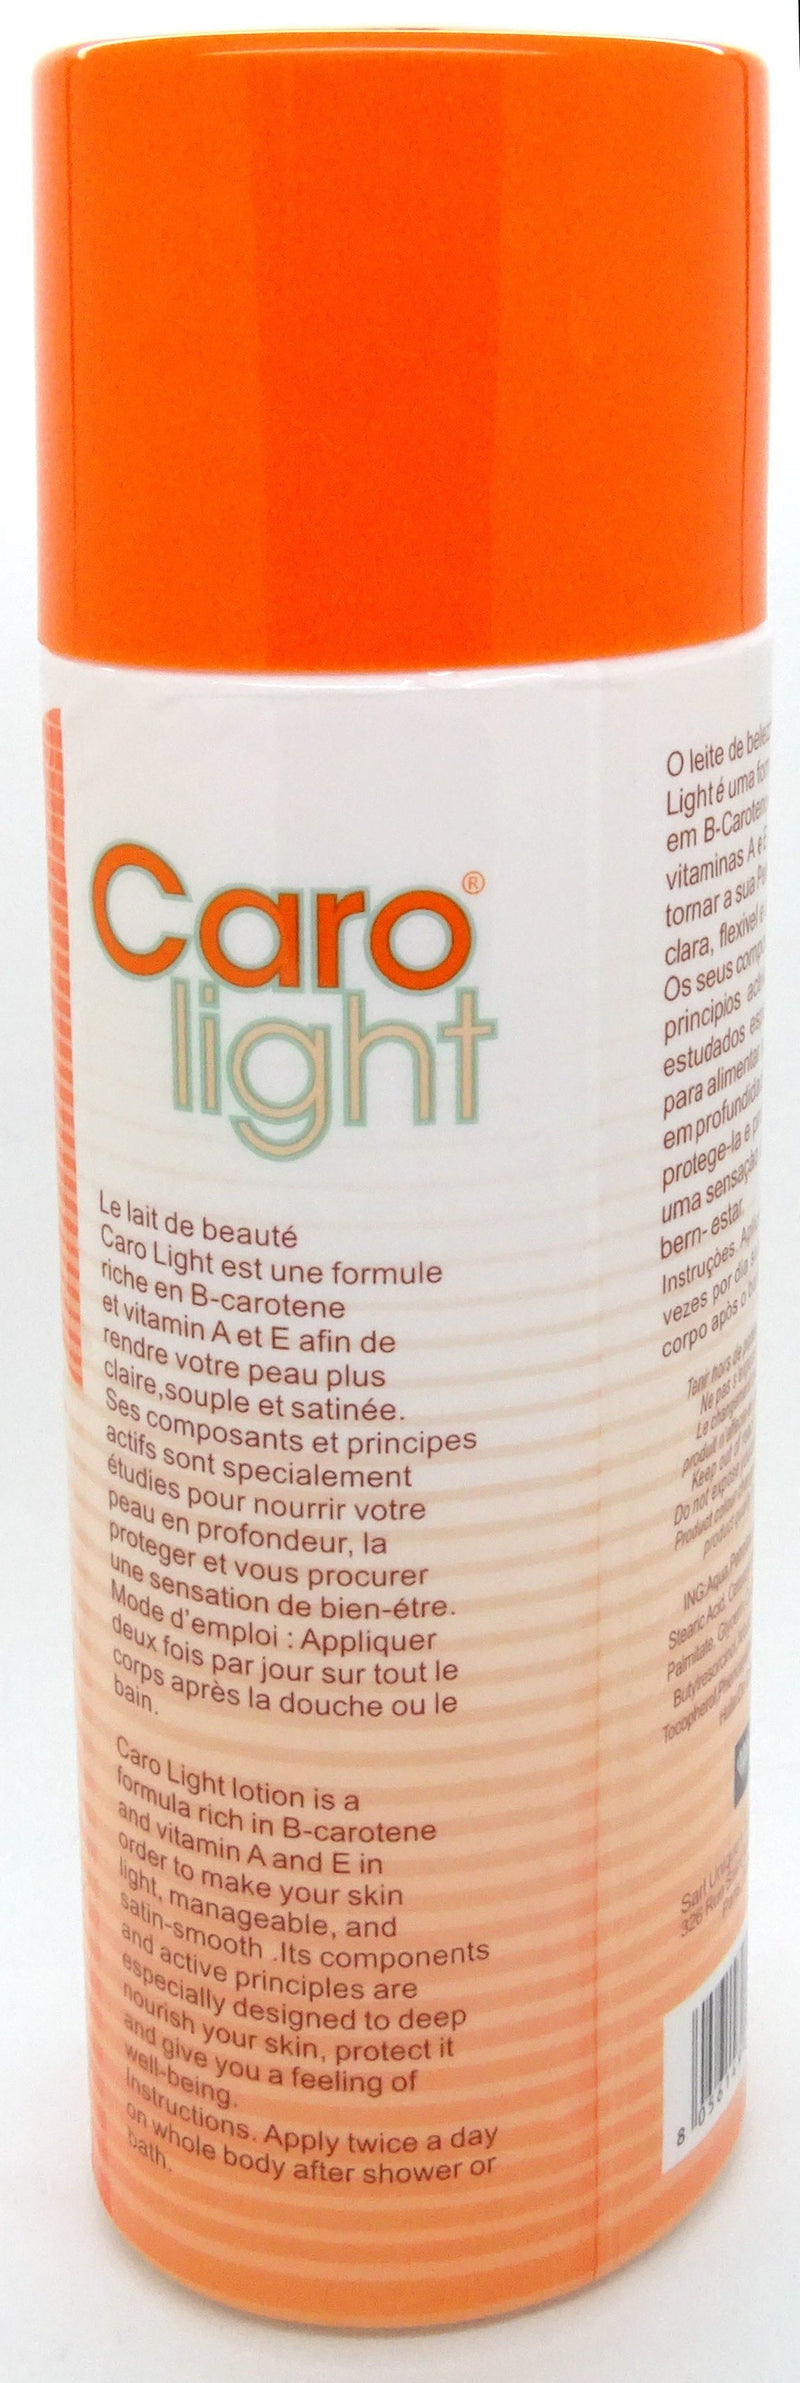 Caro Light Caro light Lightening Beauty Lotion With Carrot Oil 500ml